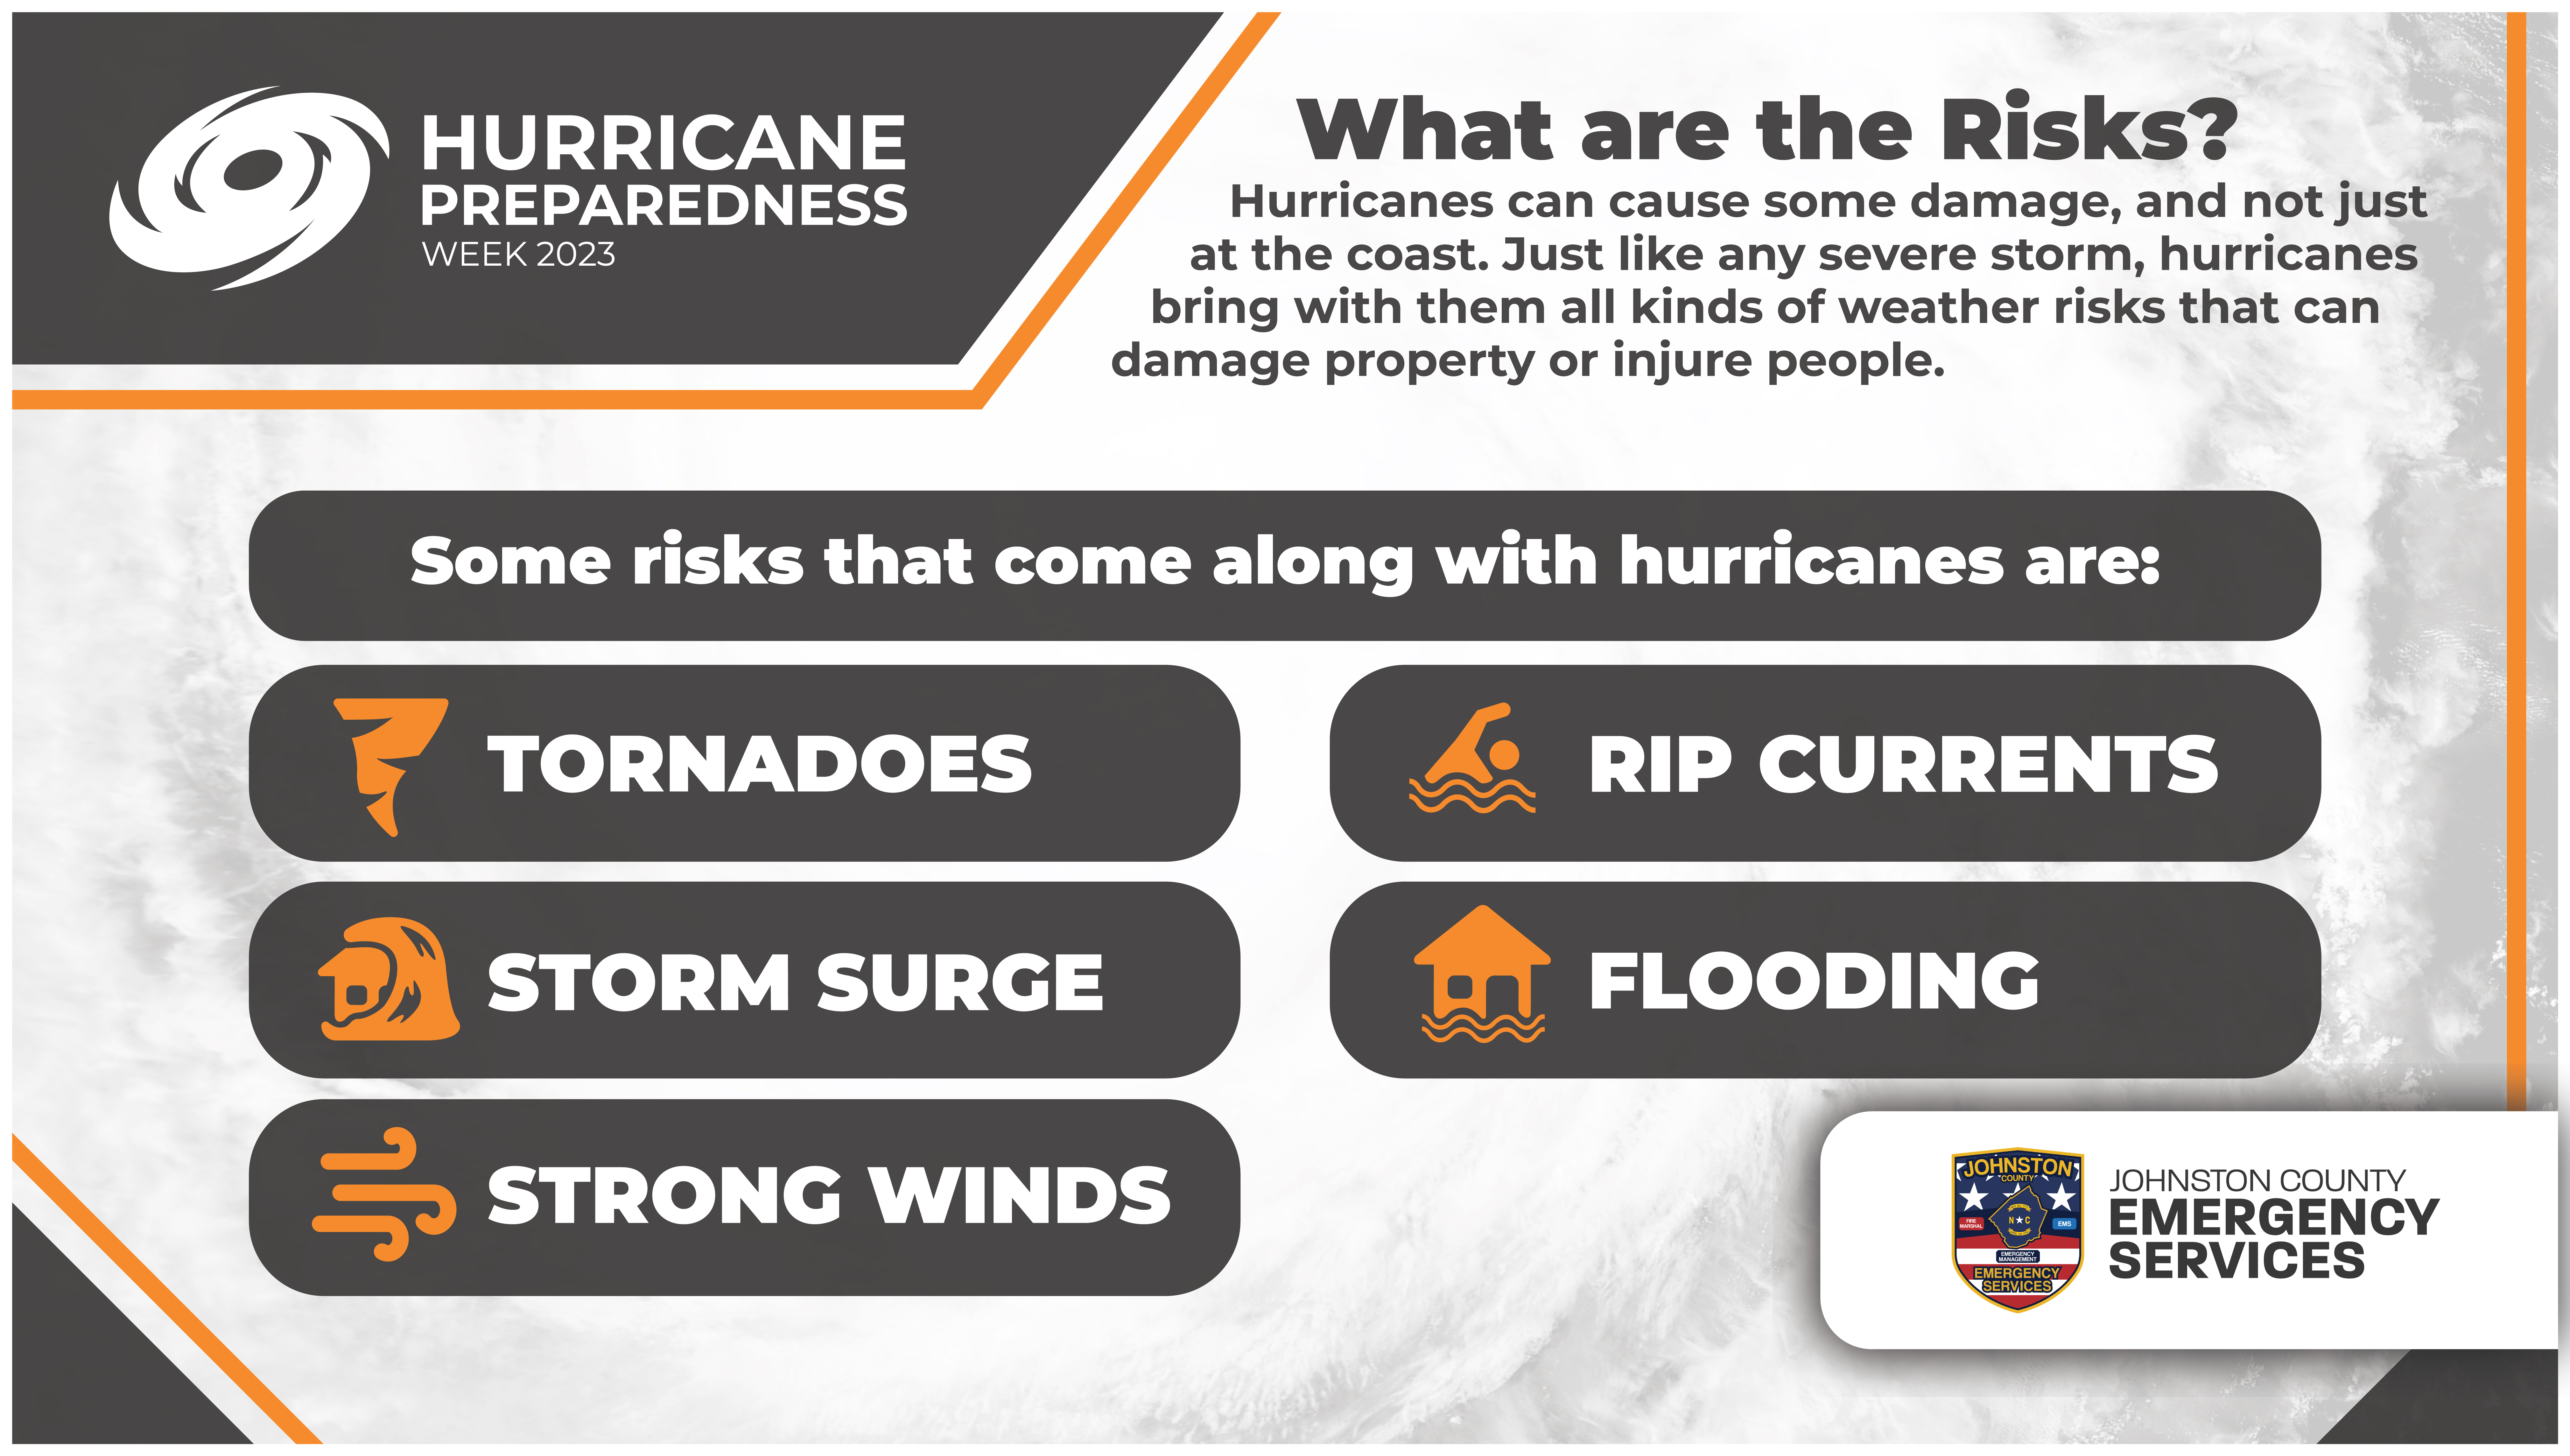 Hurricane Preparedness Week | Risks